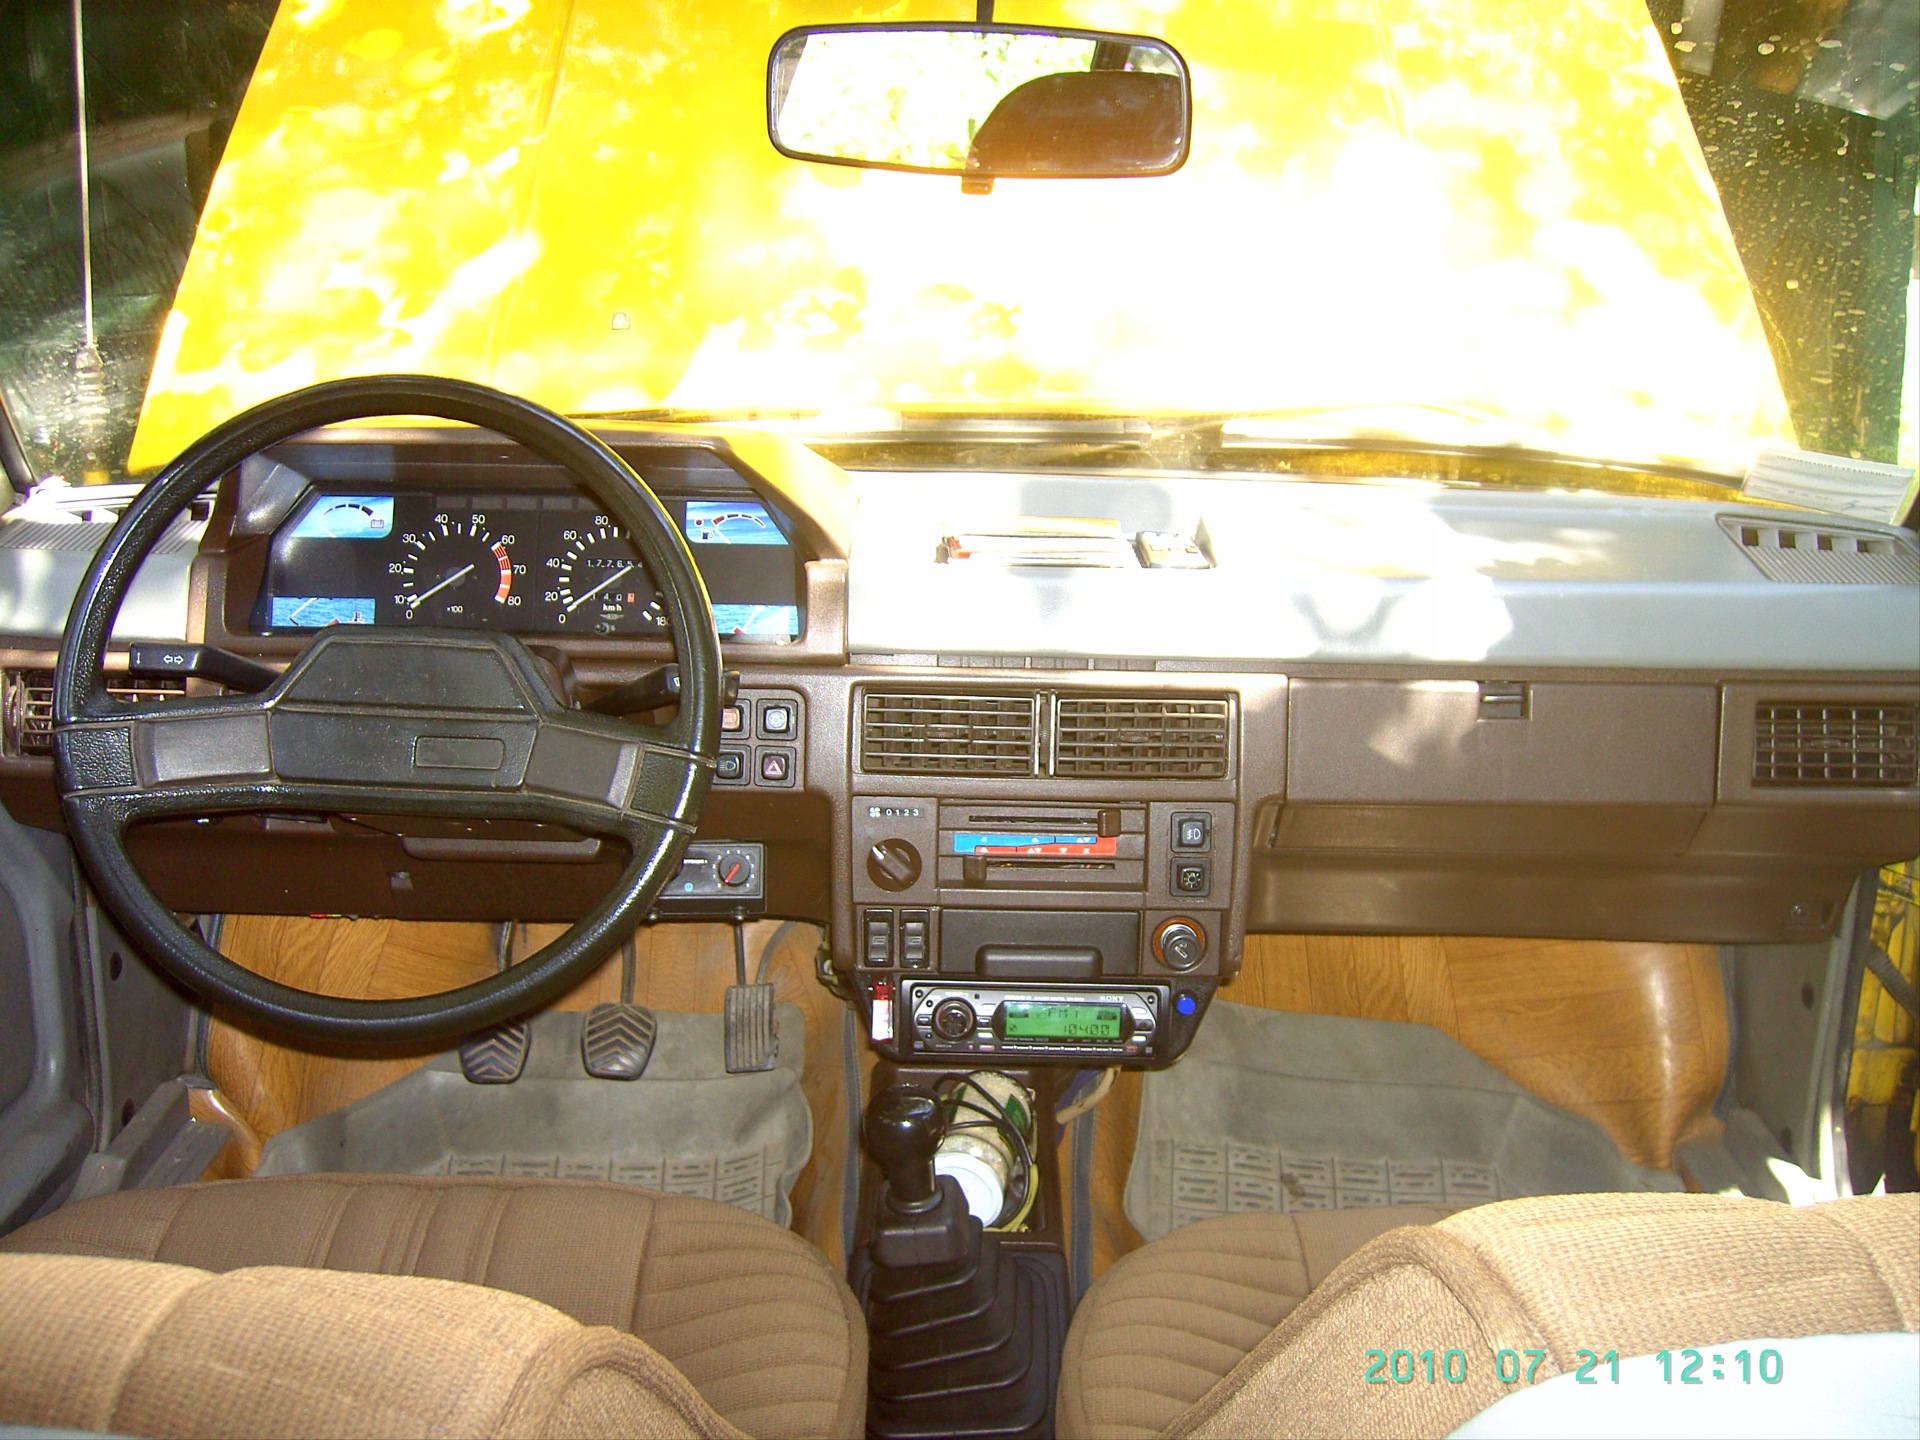    2141 17  1987     DRIVE2